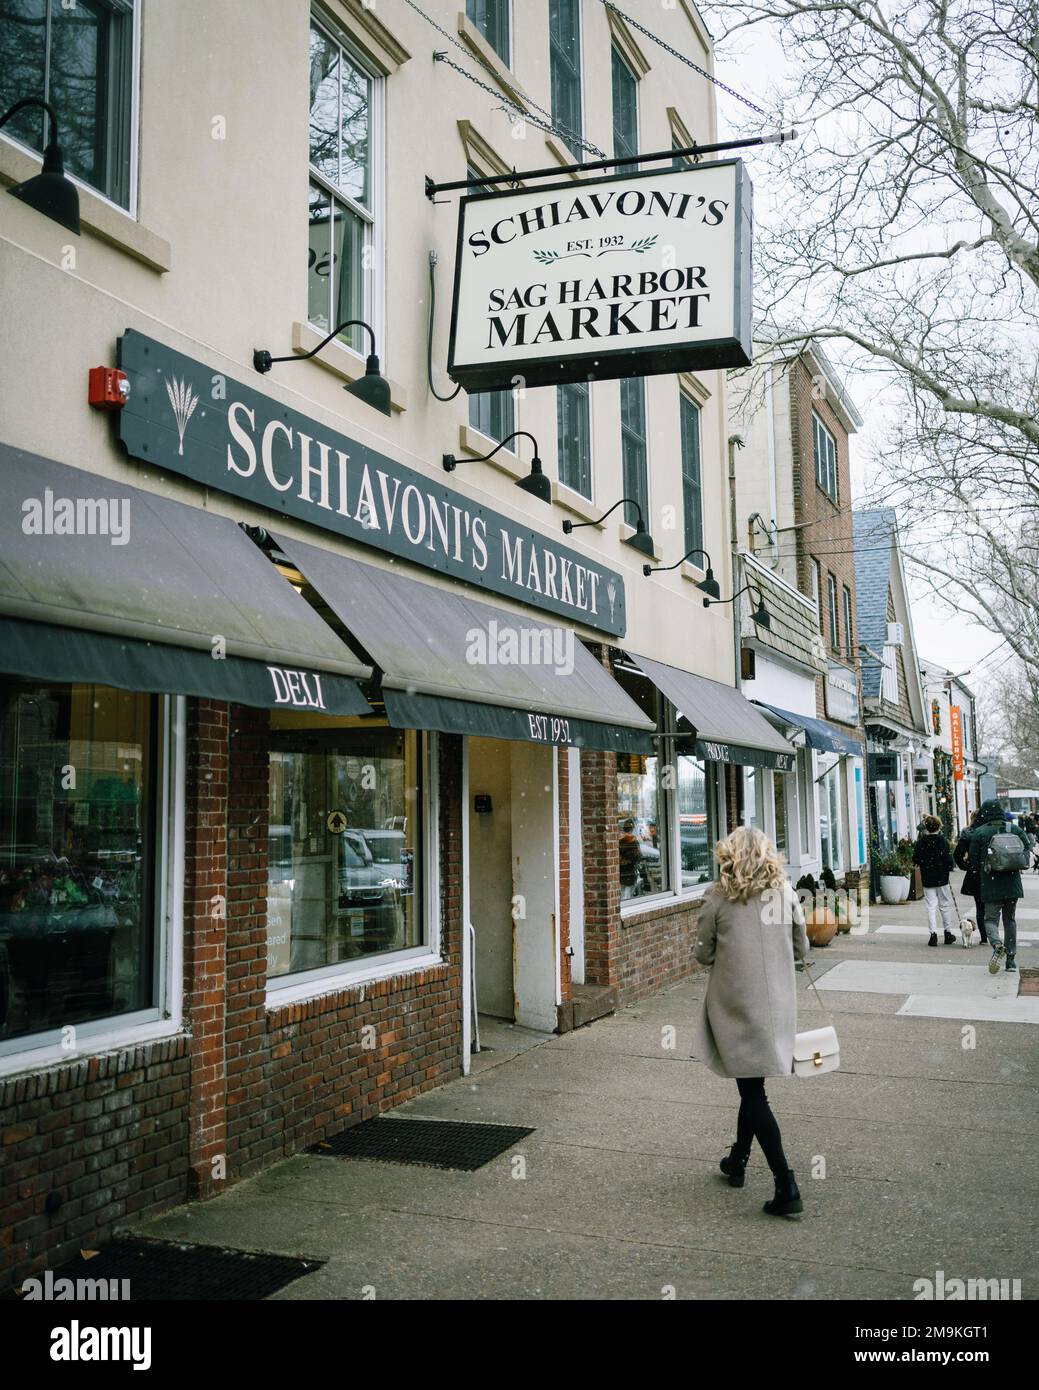 Schiavonis Market vintage sign, Sag Harbor, New York Stock Photo